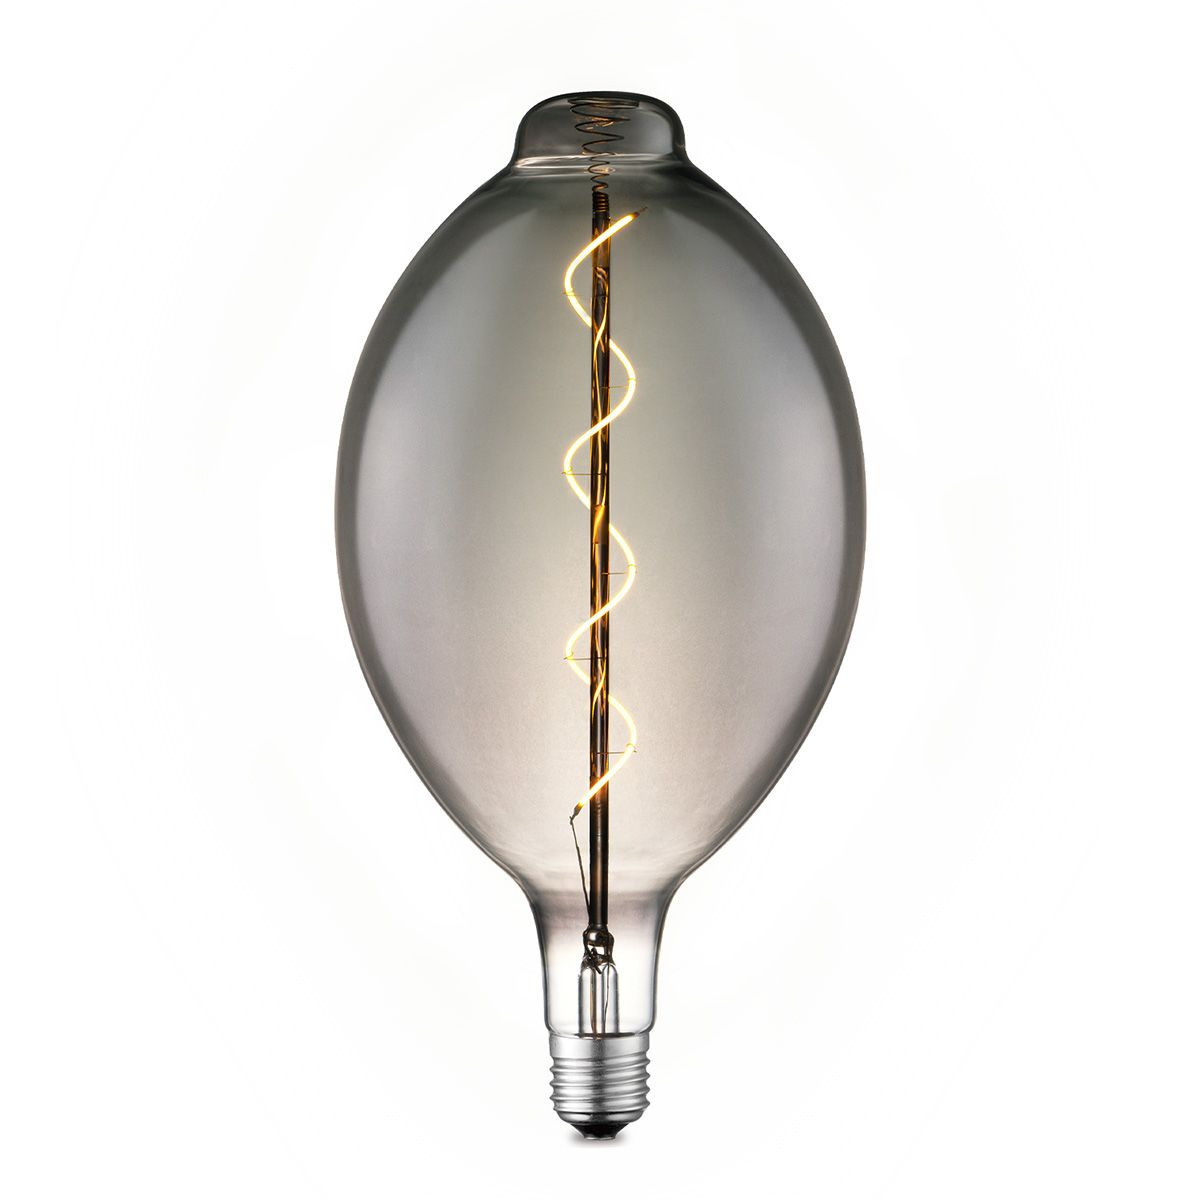 Edison Vintage LED lamp E27 LED filament lichtbron, Ovaal Carbon 18/18/33cm, Rook, Retro LED lamp Dimbaar, 4W 100lm 1800K, warm wit licht, geschikt voor E27 fitting